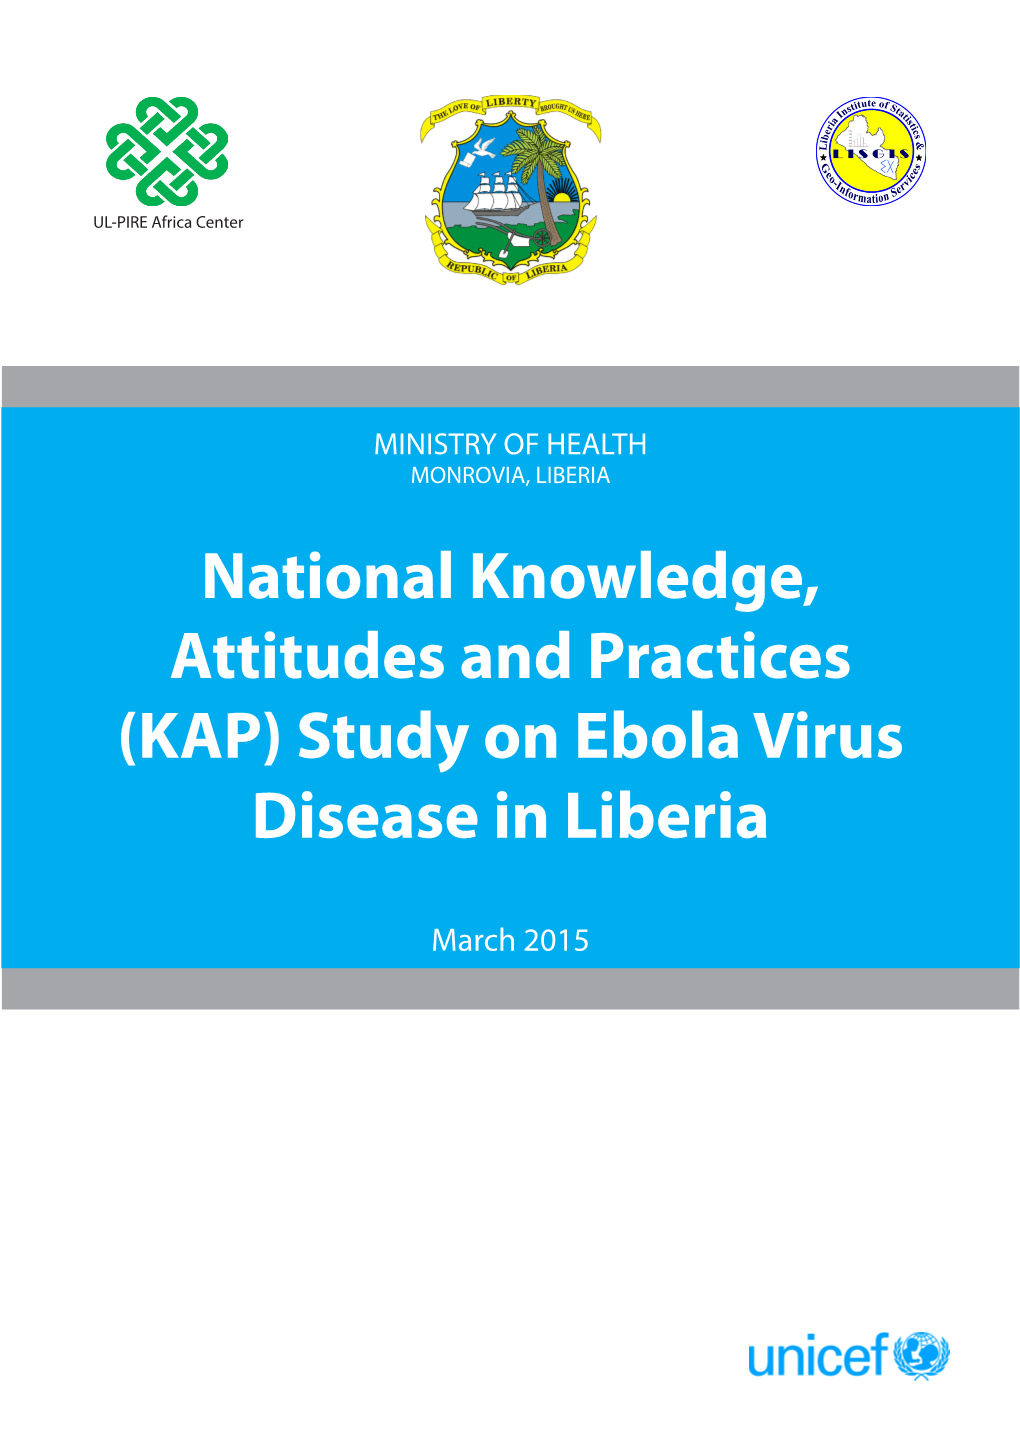 (KAP) Study on Ebola Virus Disease in Liberia